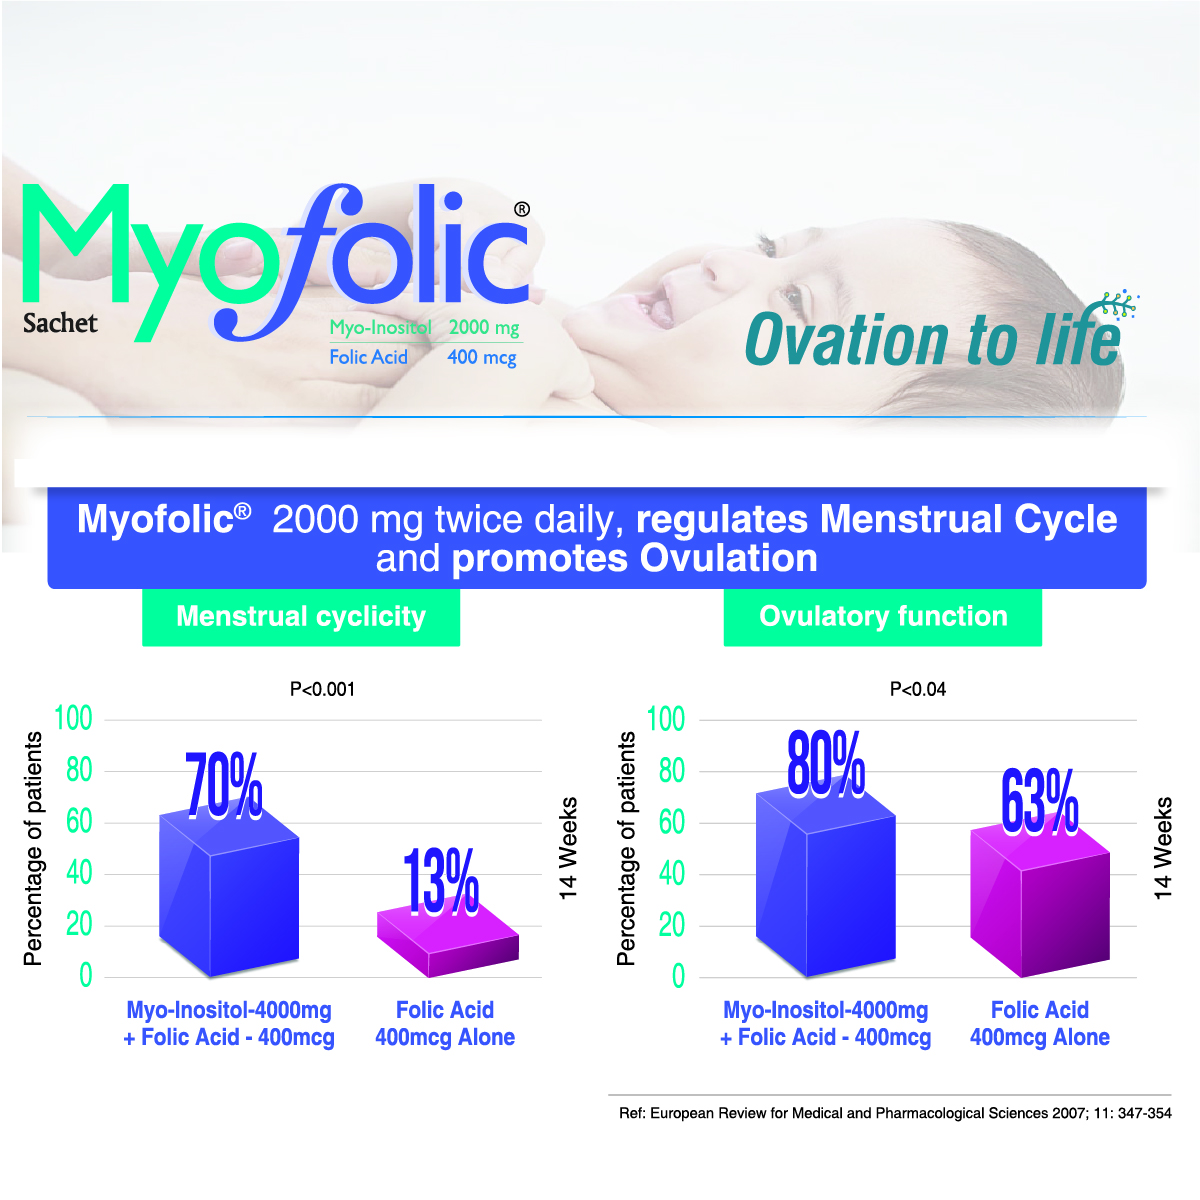 Myofolic PCOS Supplement